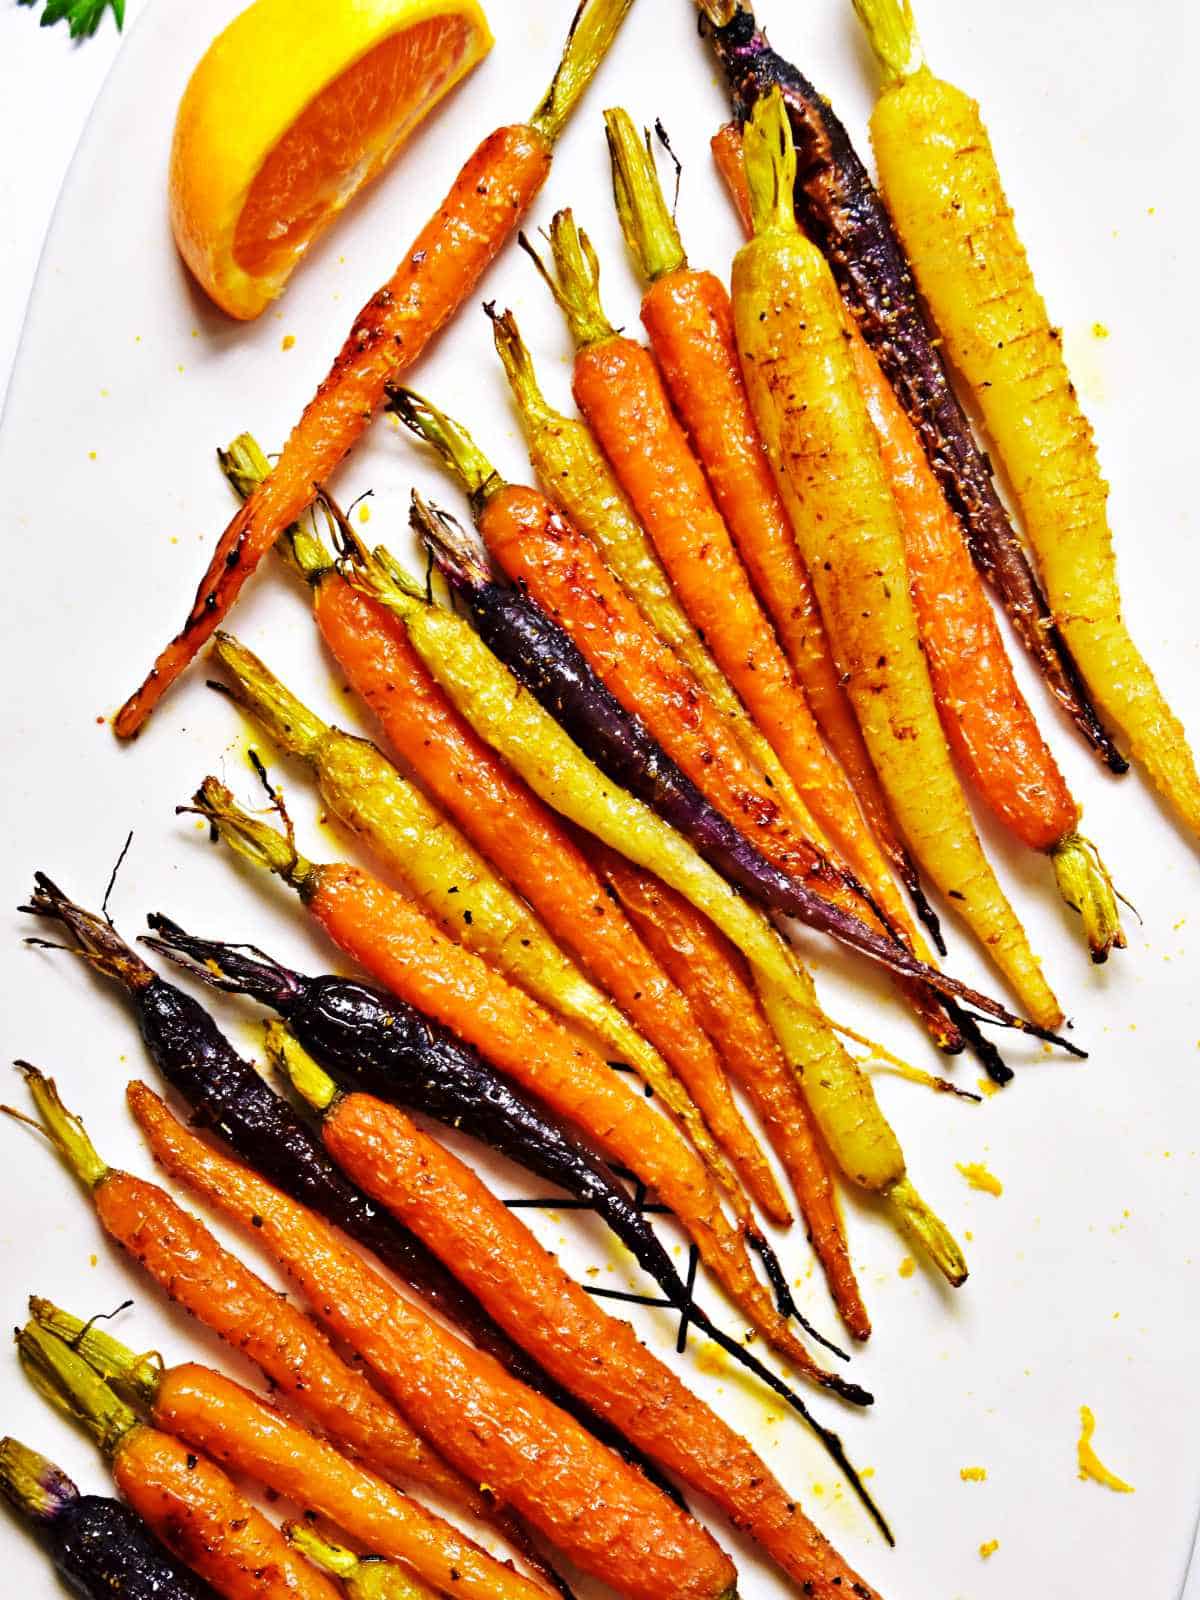 serving platter of tri color carrots garnished with herbs, olive oil, and lemon.